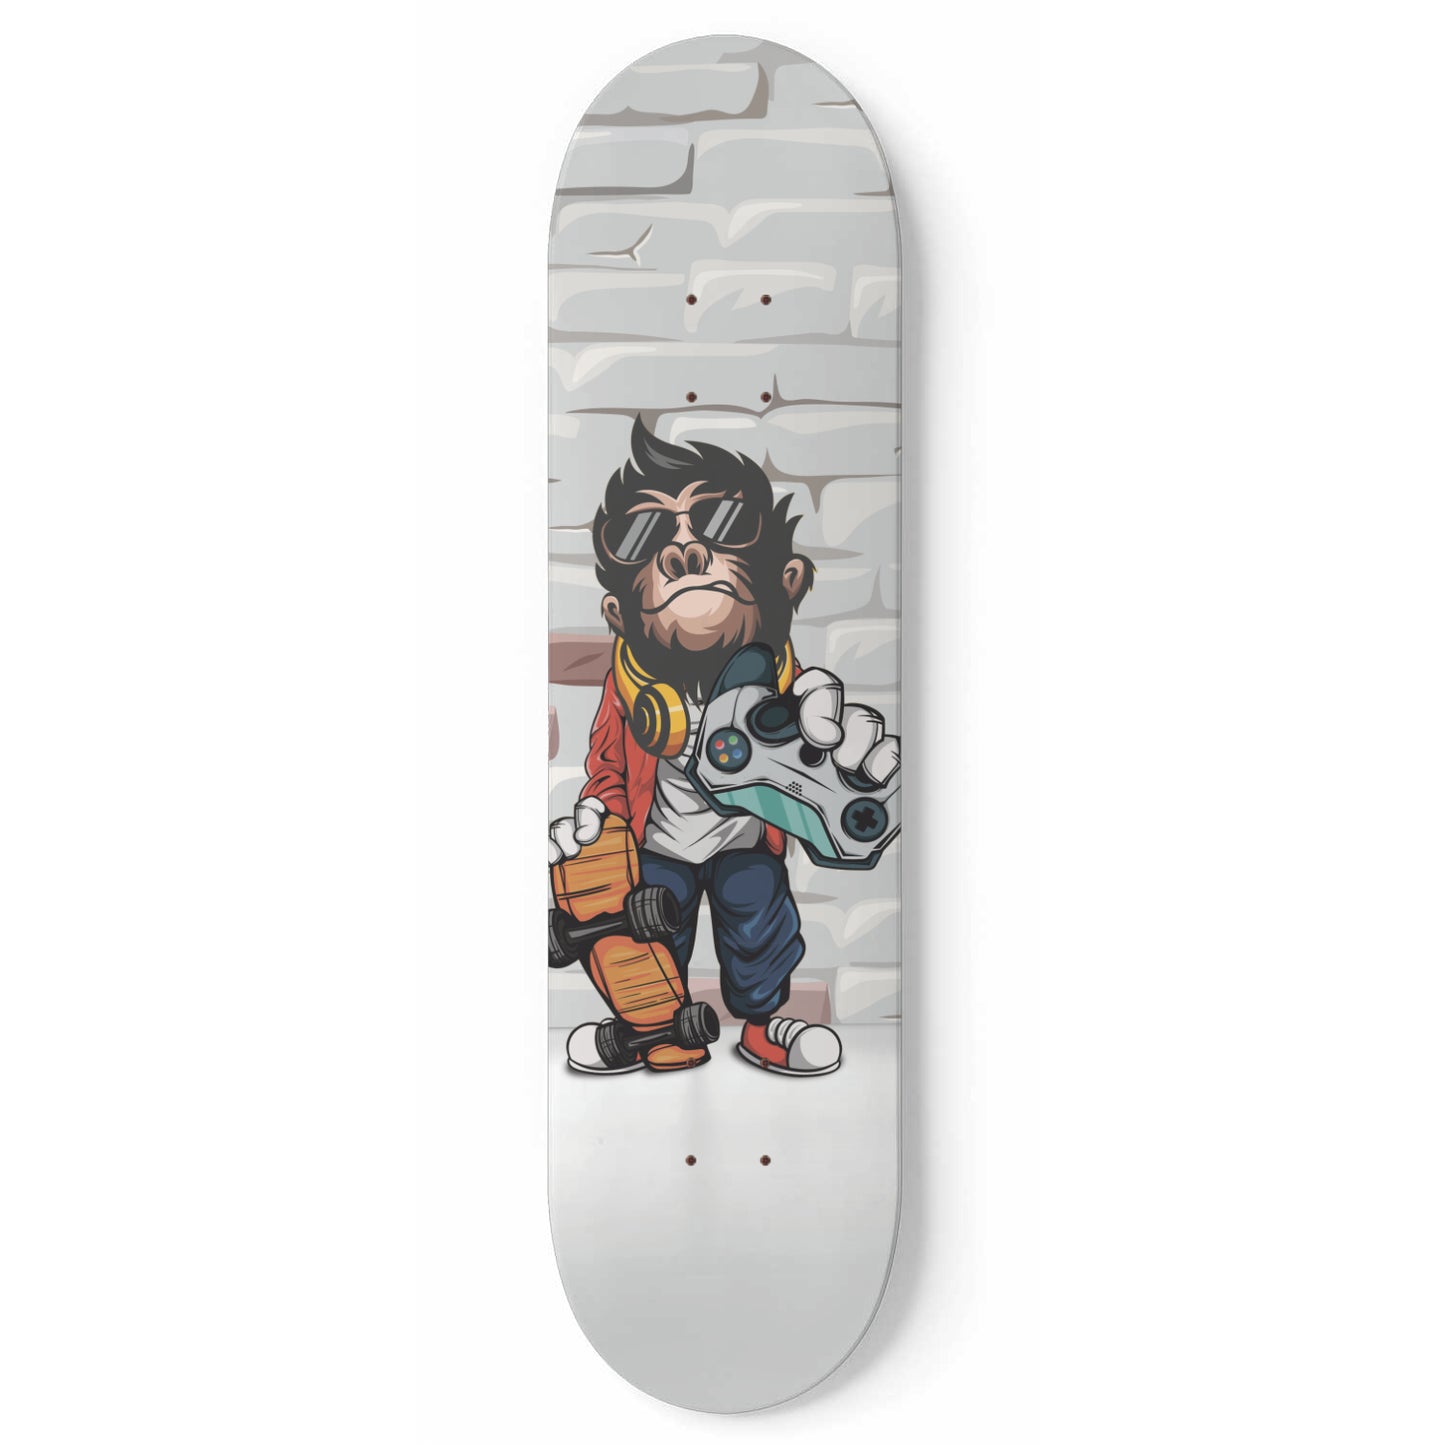 Geek Monkey Inspired - 'Monkey Gamer' Art - Skateboard Wall Art